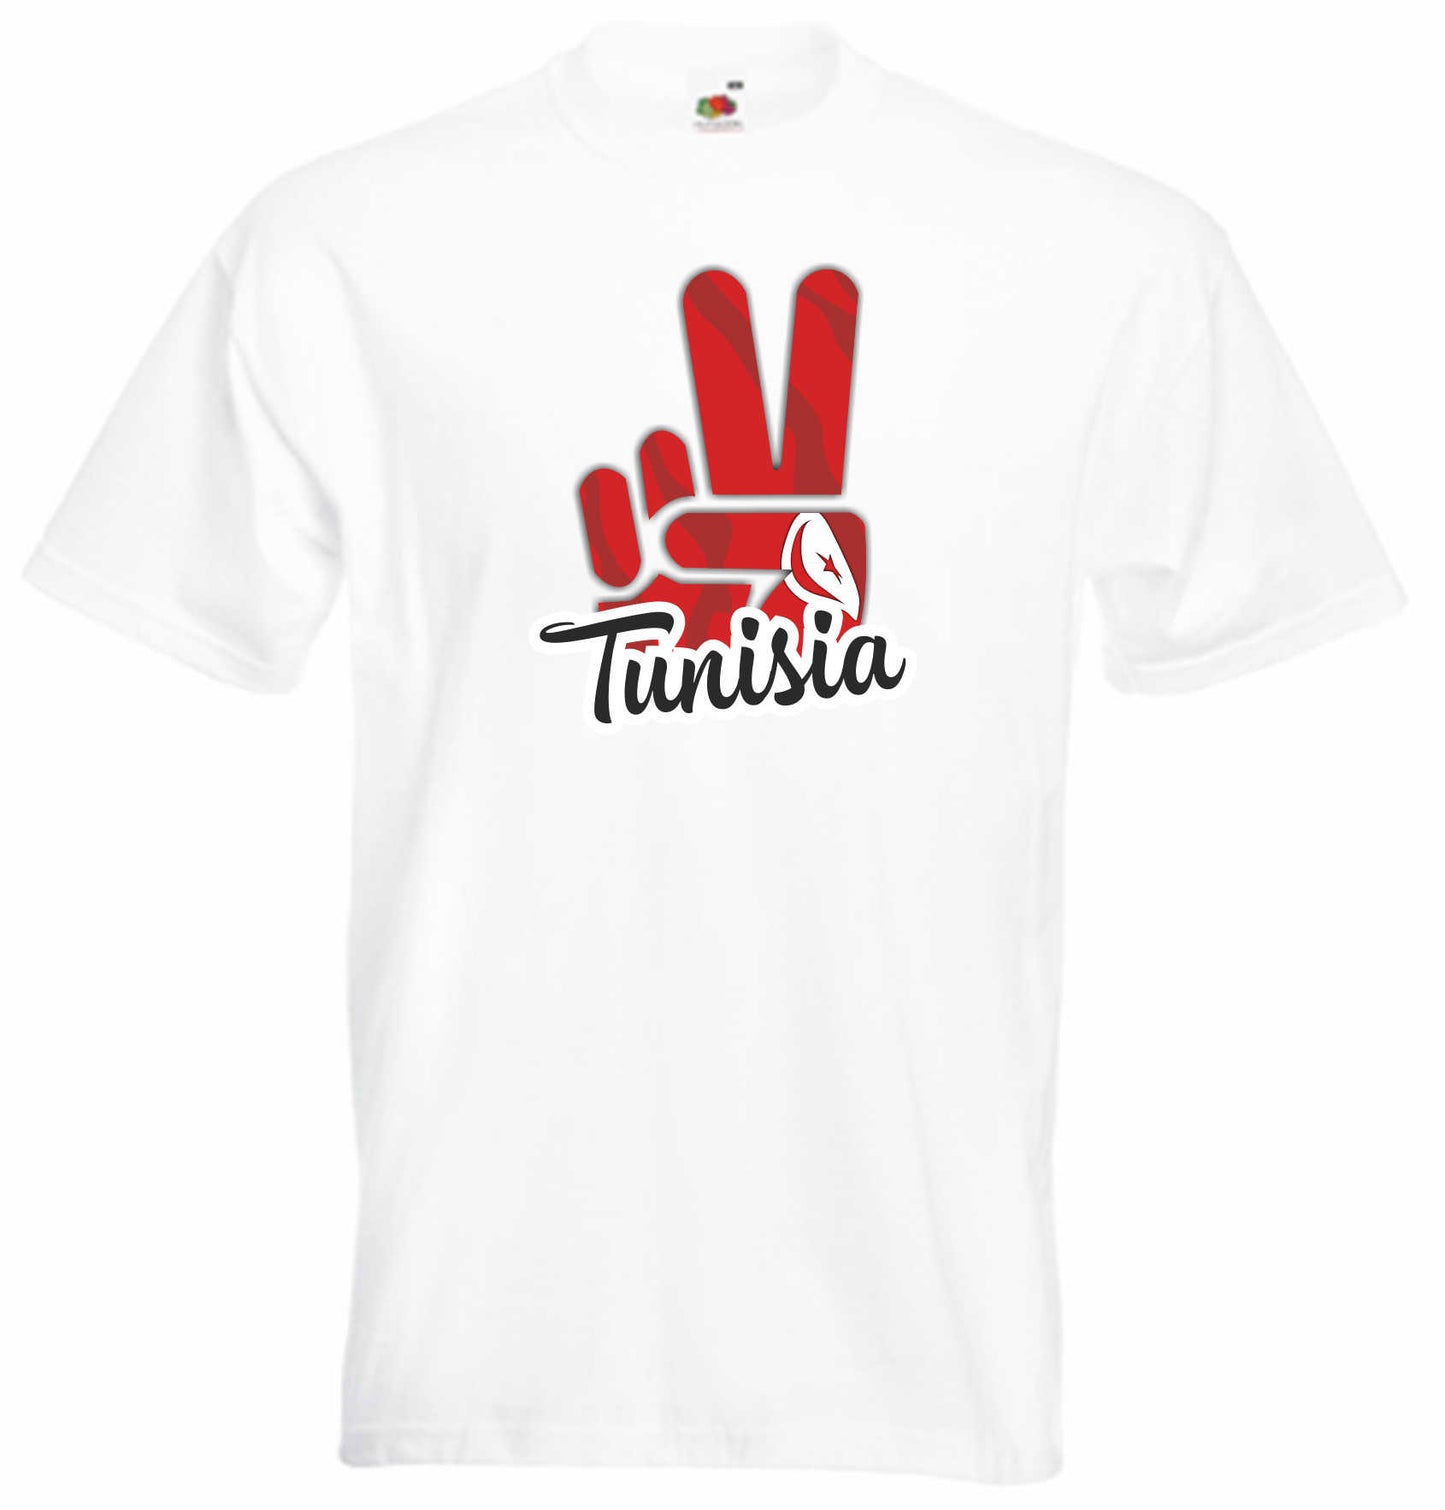 T-Shirt Herren - Victory - Flagge / Fahne - Tunisia - Sieg